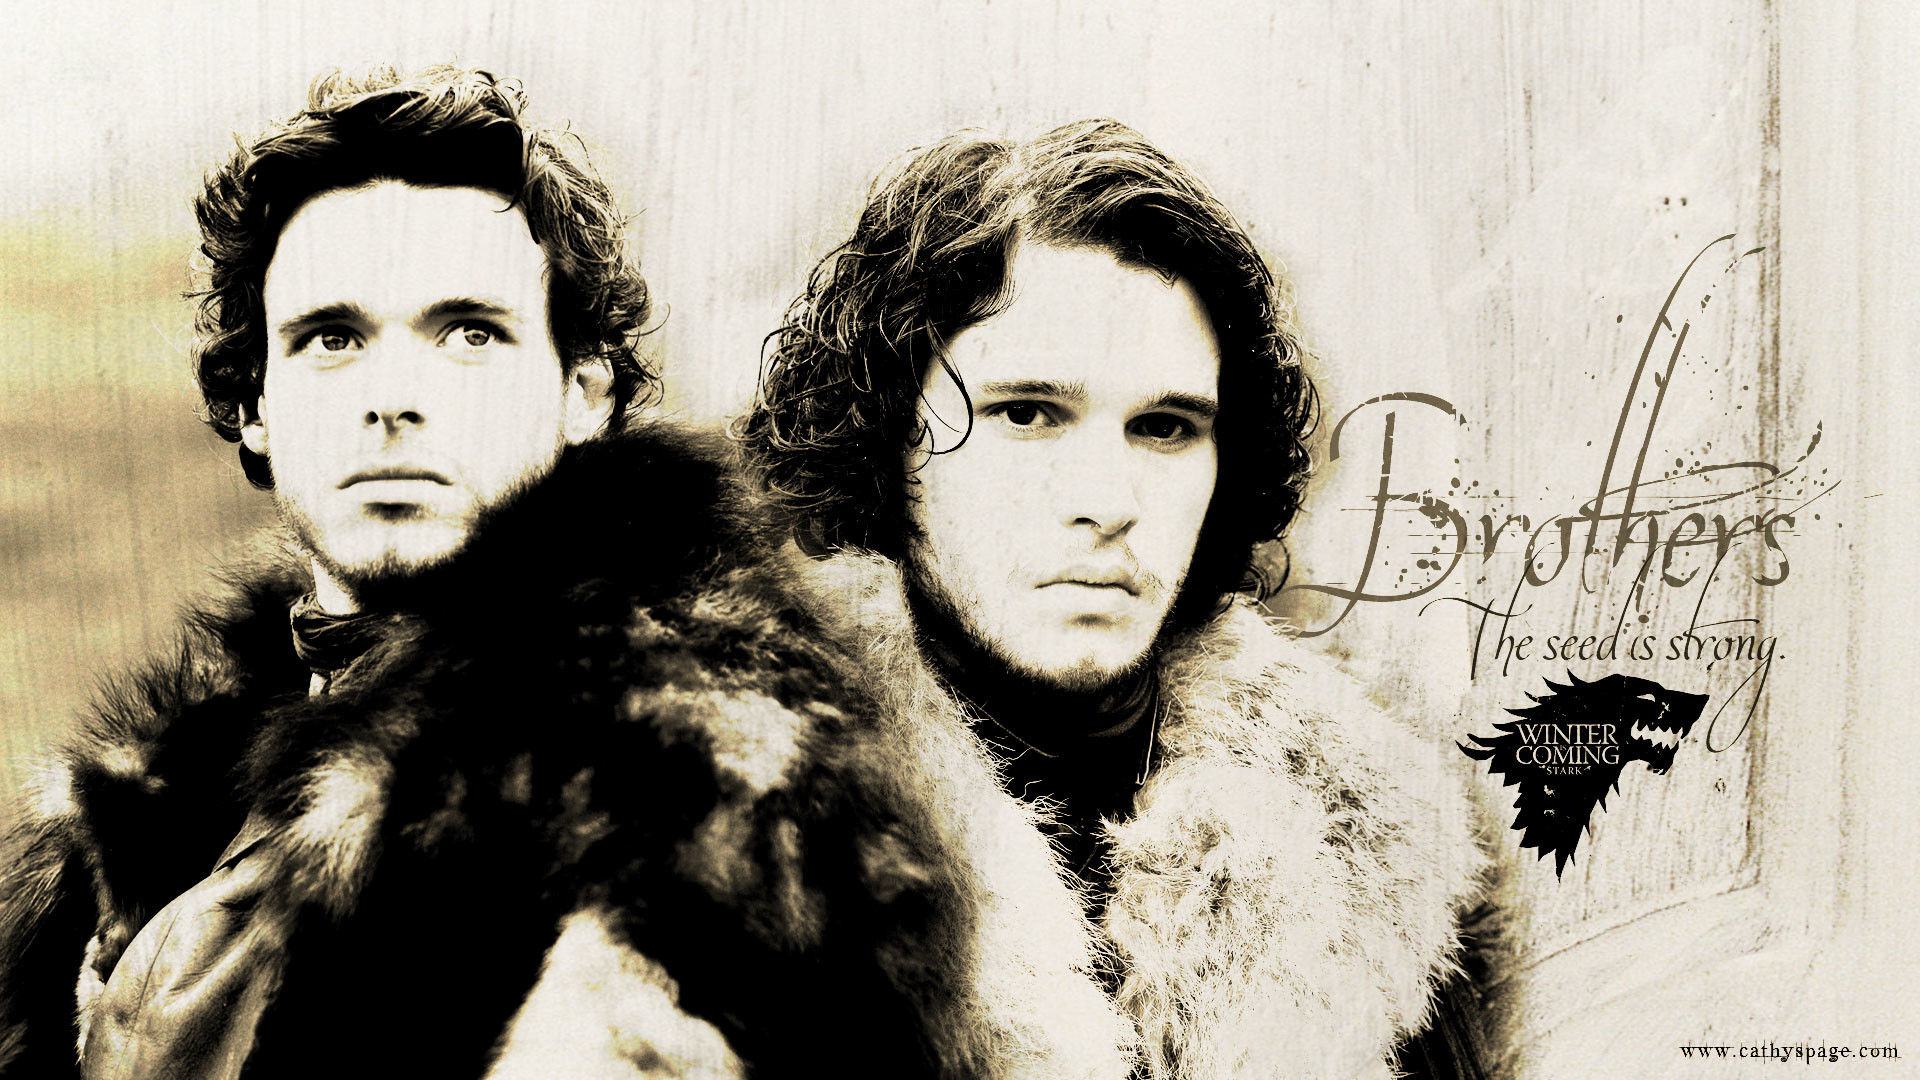 1920x1080 Jon Snow and Robb Stark images Robb Stark and Jon Snow HD wallpaper and  background photos